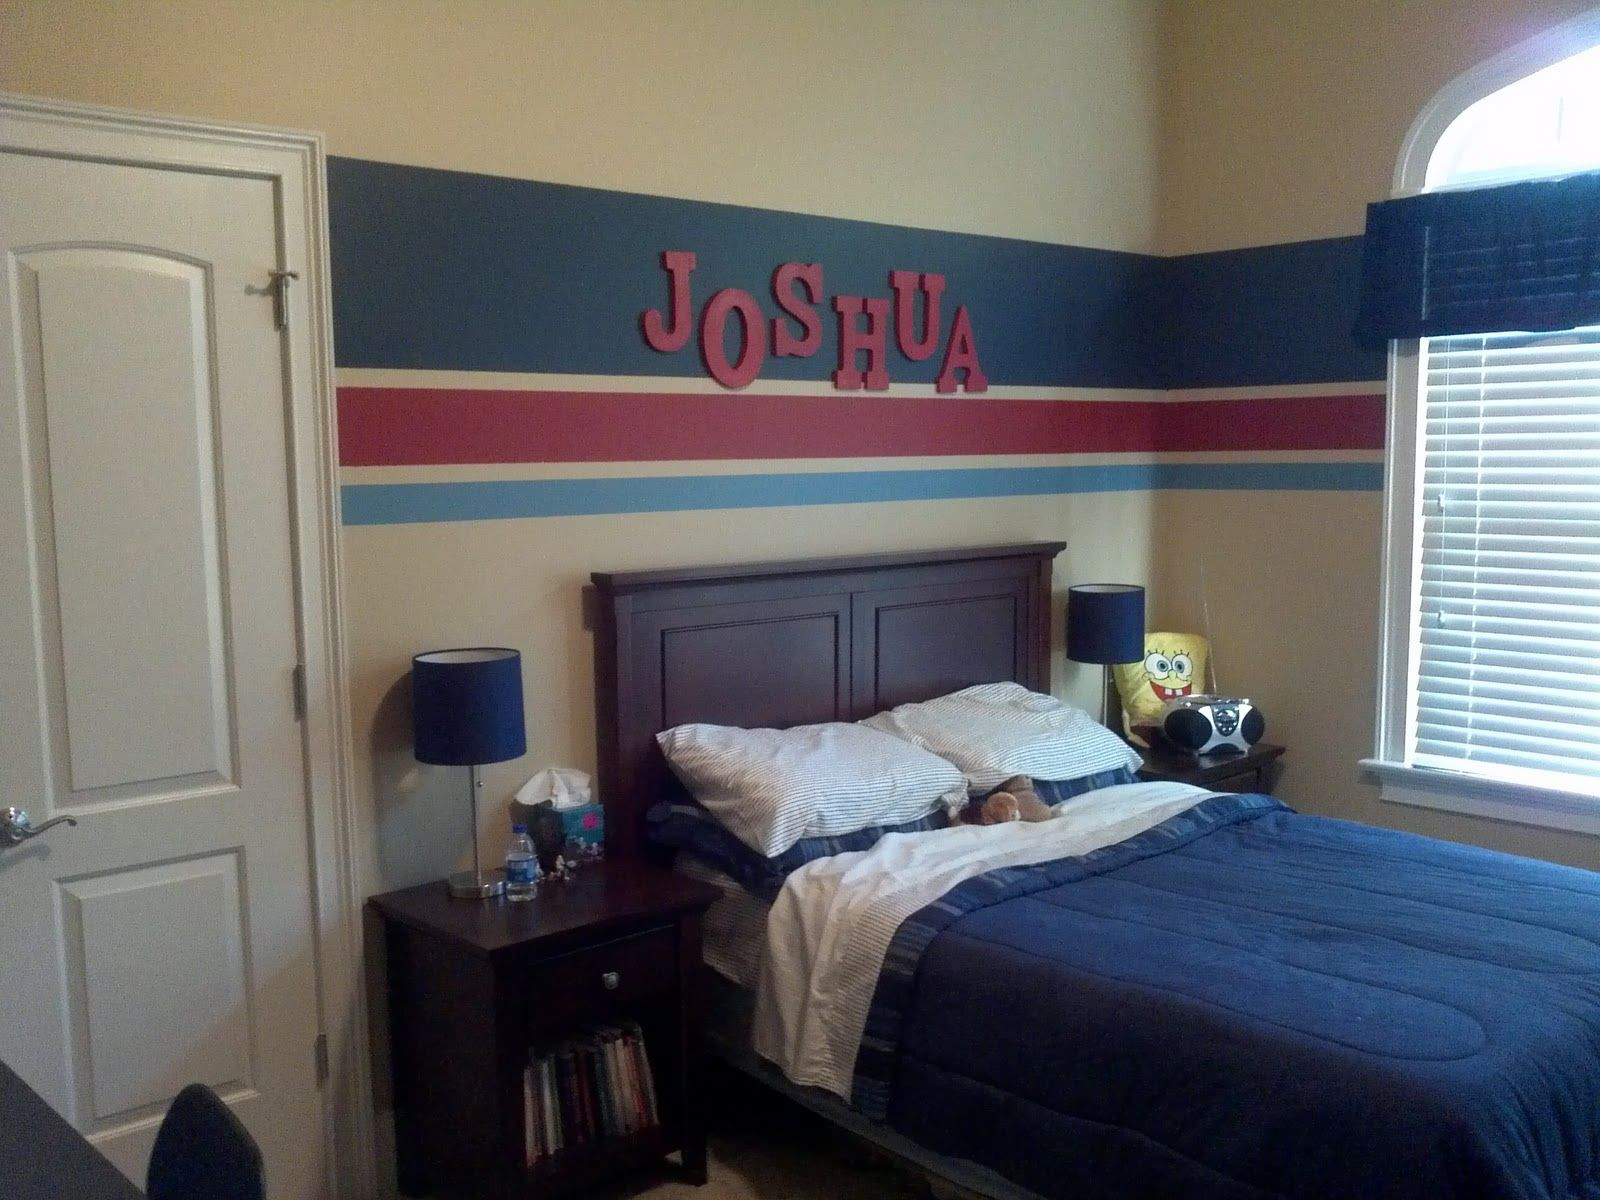 Boy Bedroom Wall Decor
 Eat Sleep Decorate Striped Walls Boys Bedroom FINISHED